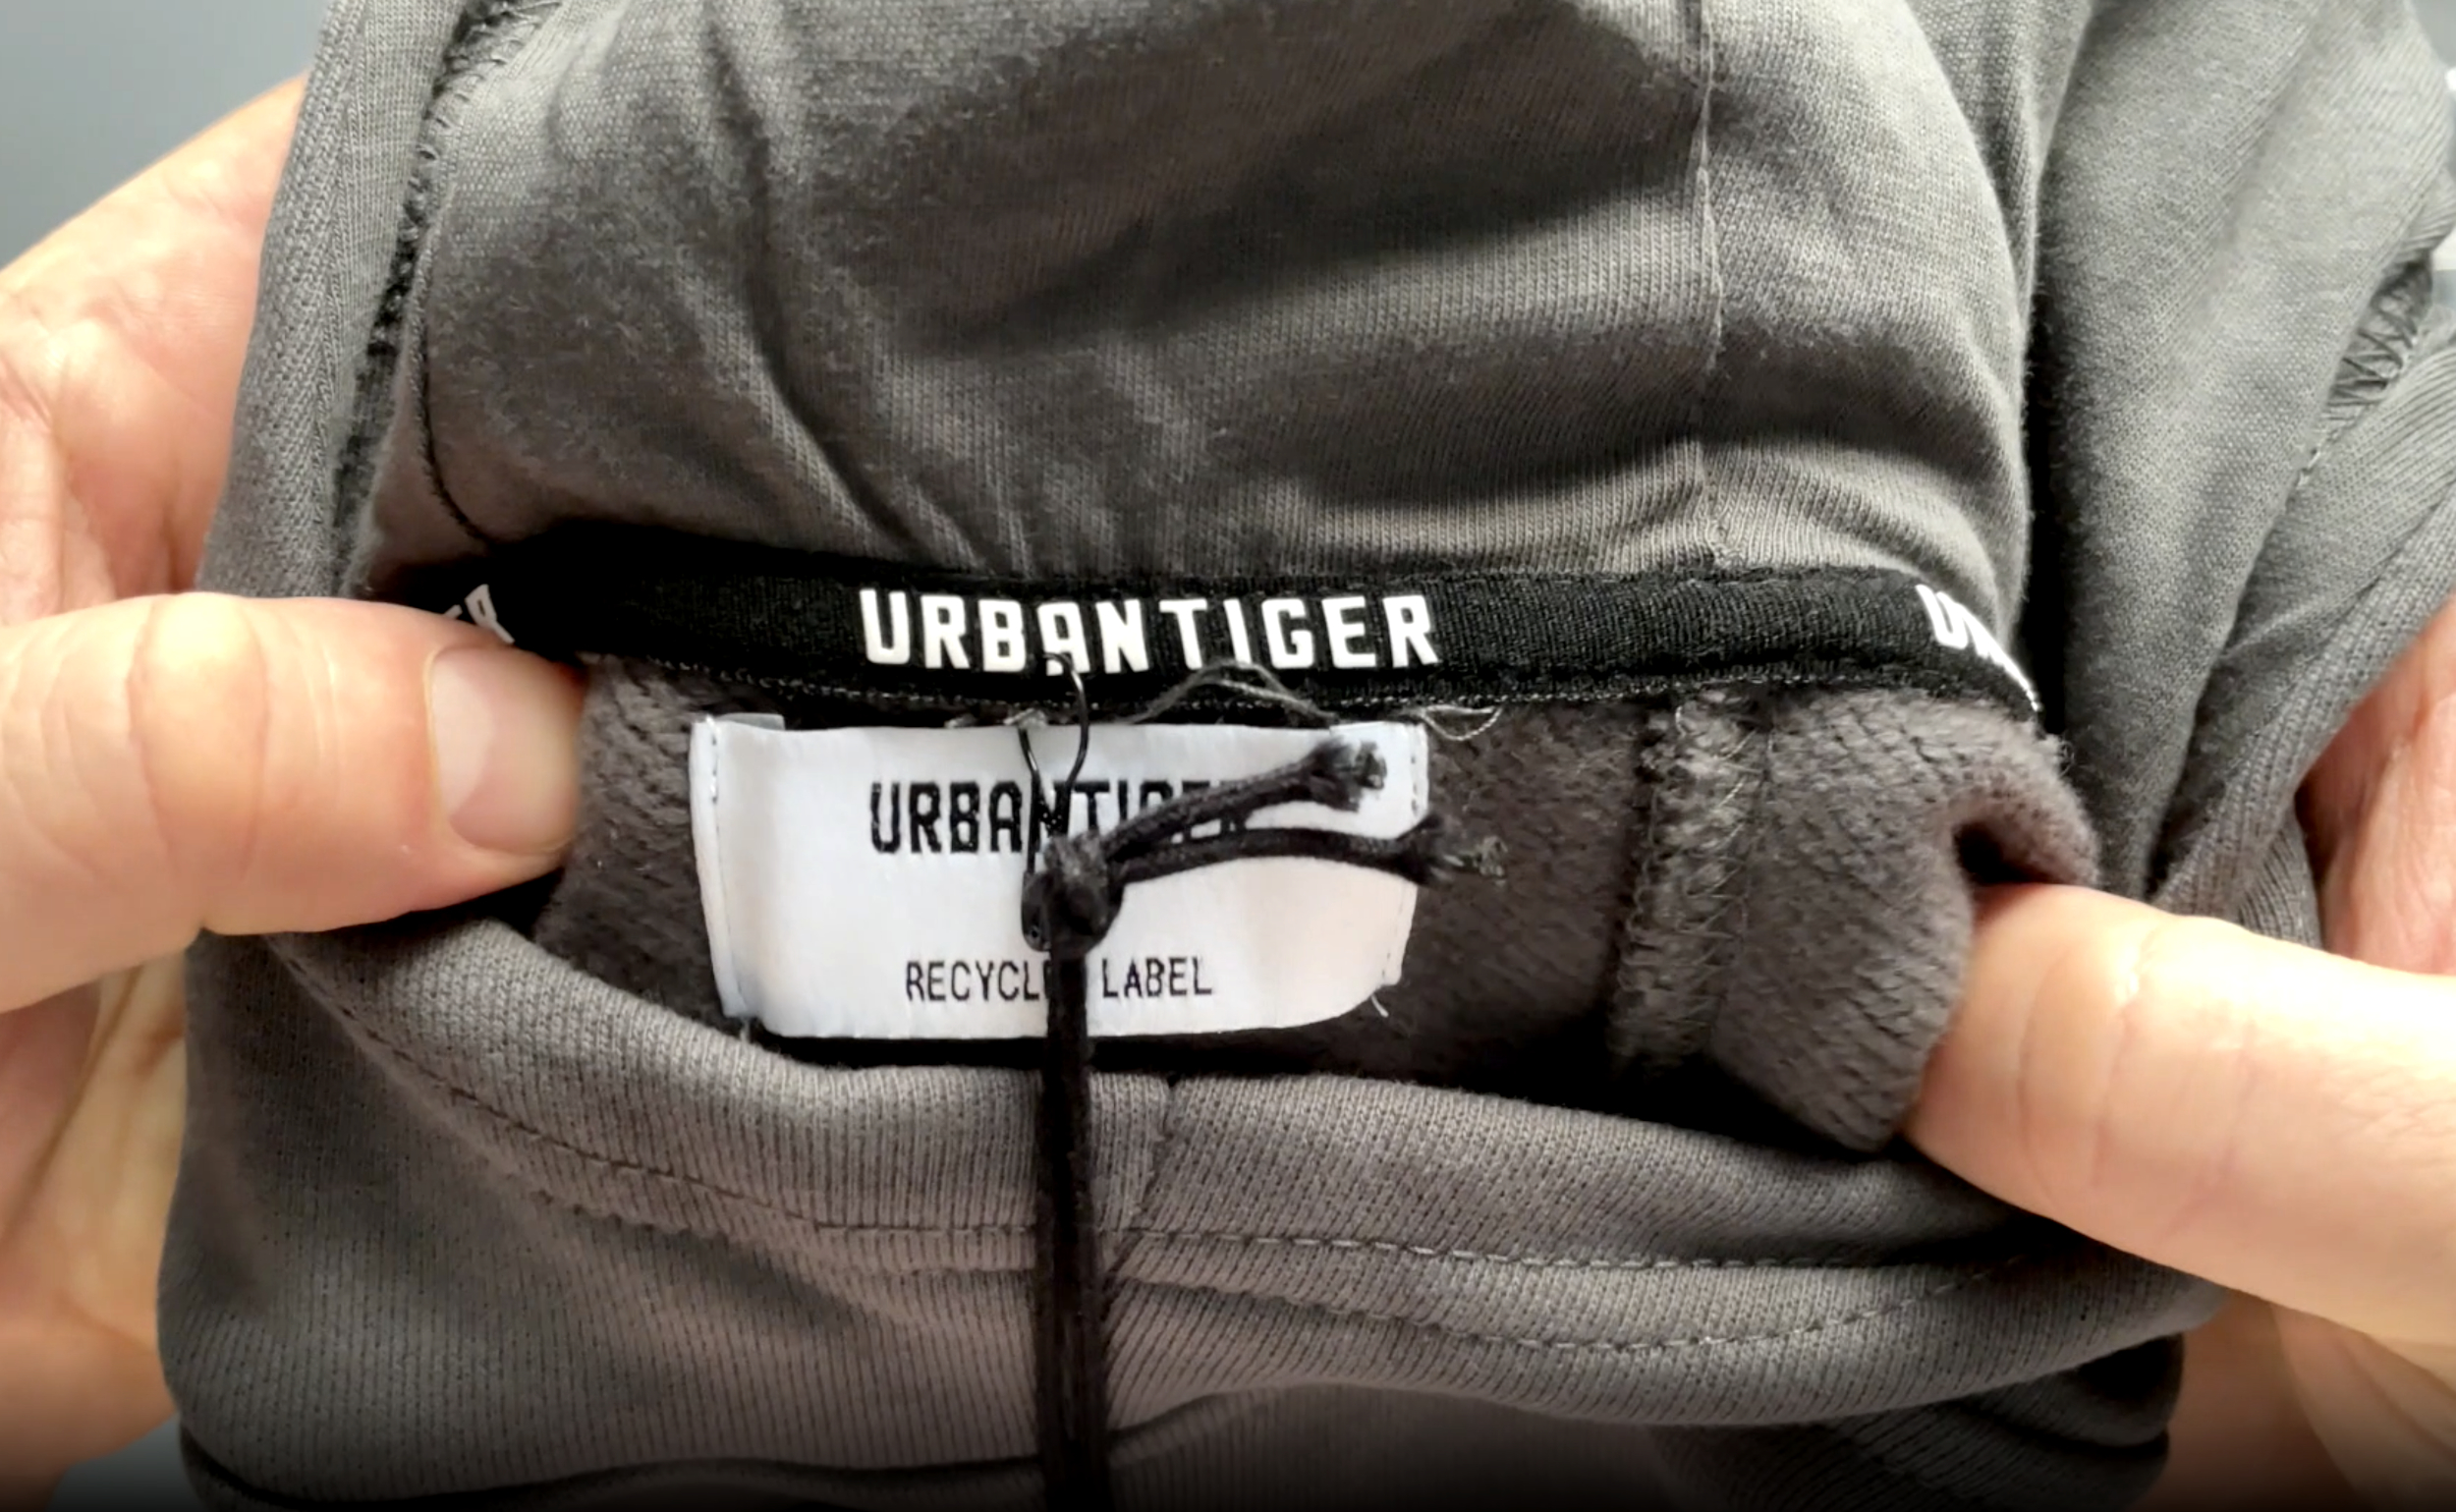 Urban Tiger